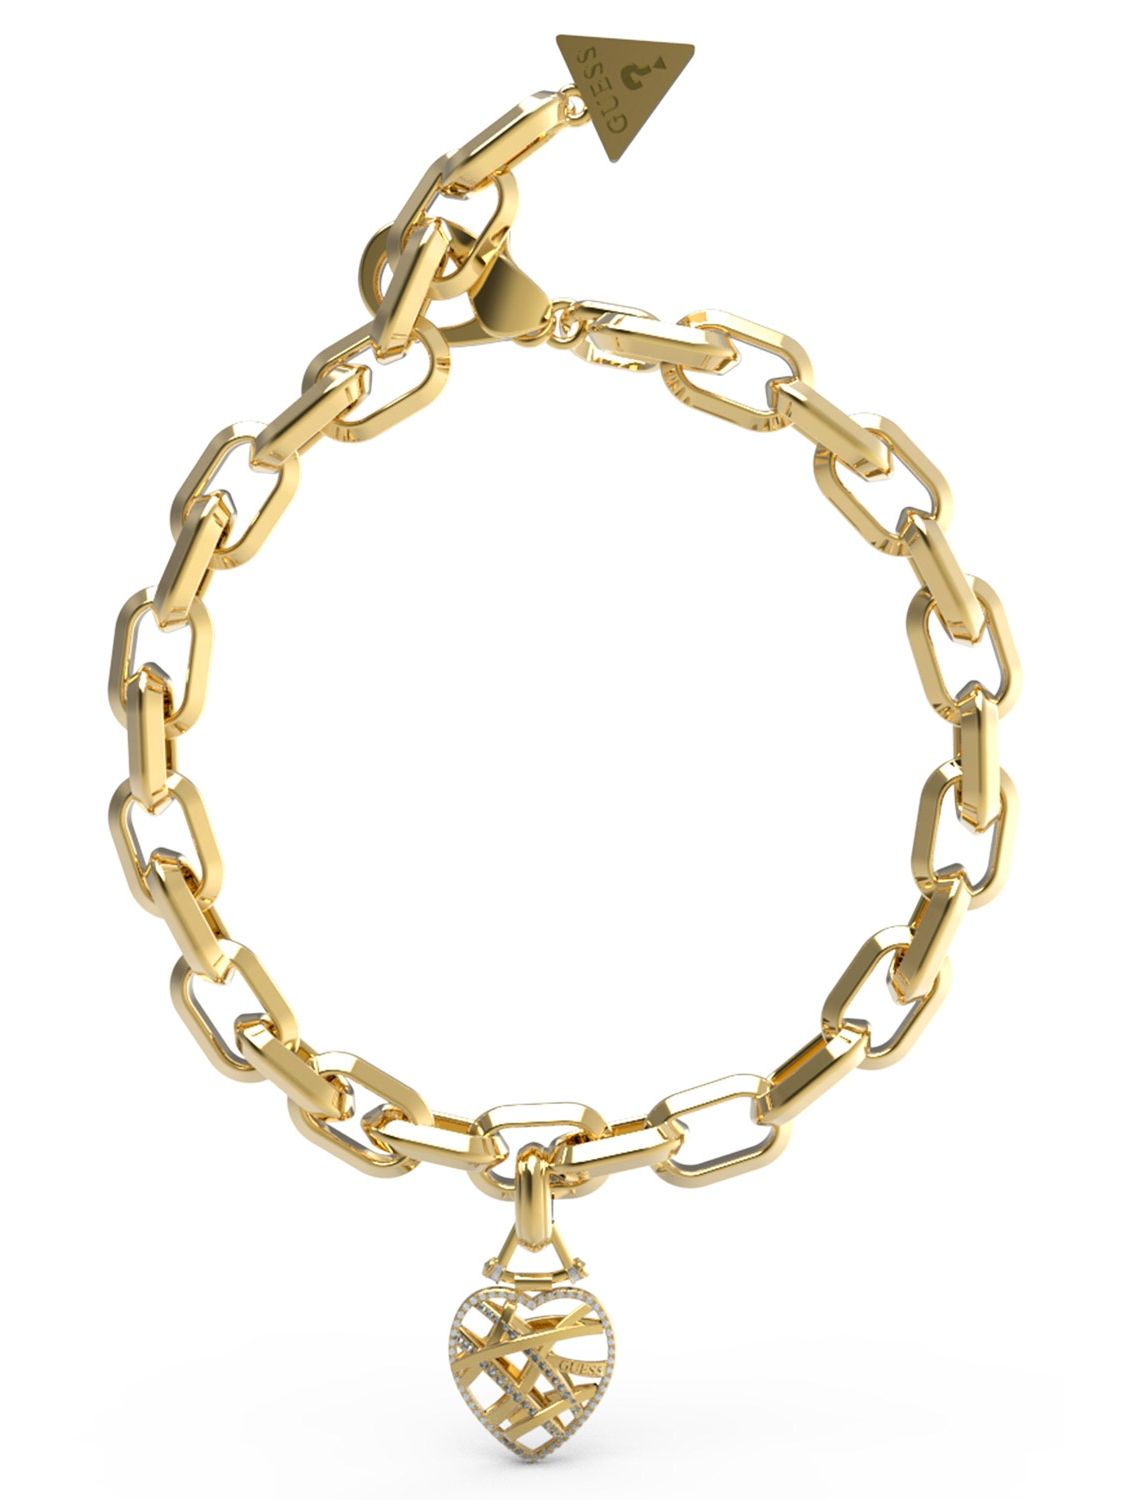 Guess Women's Bracelet with Heart Charm Gold Tone JUBB03094JWYG • uhrcenter